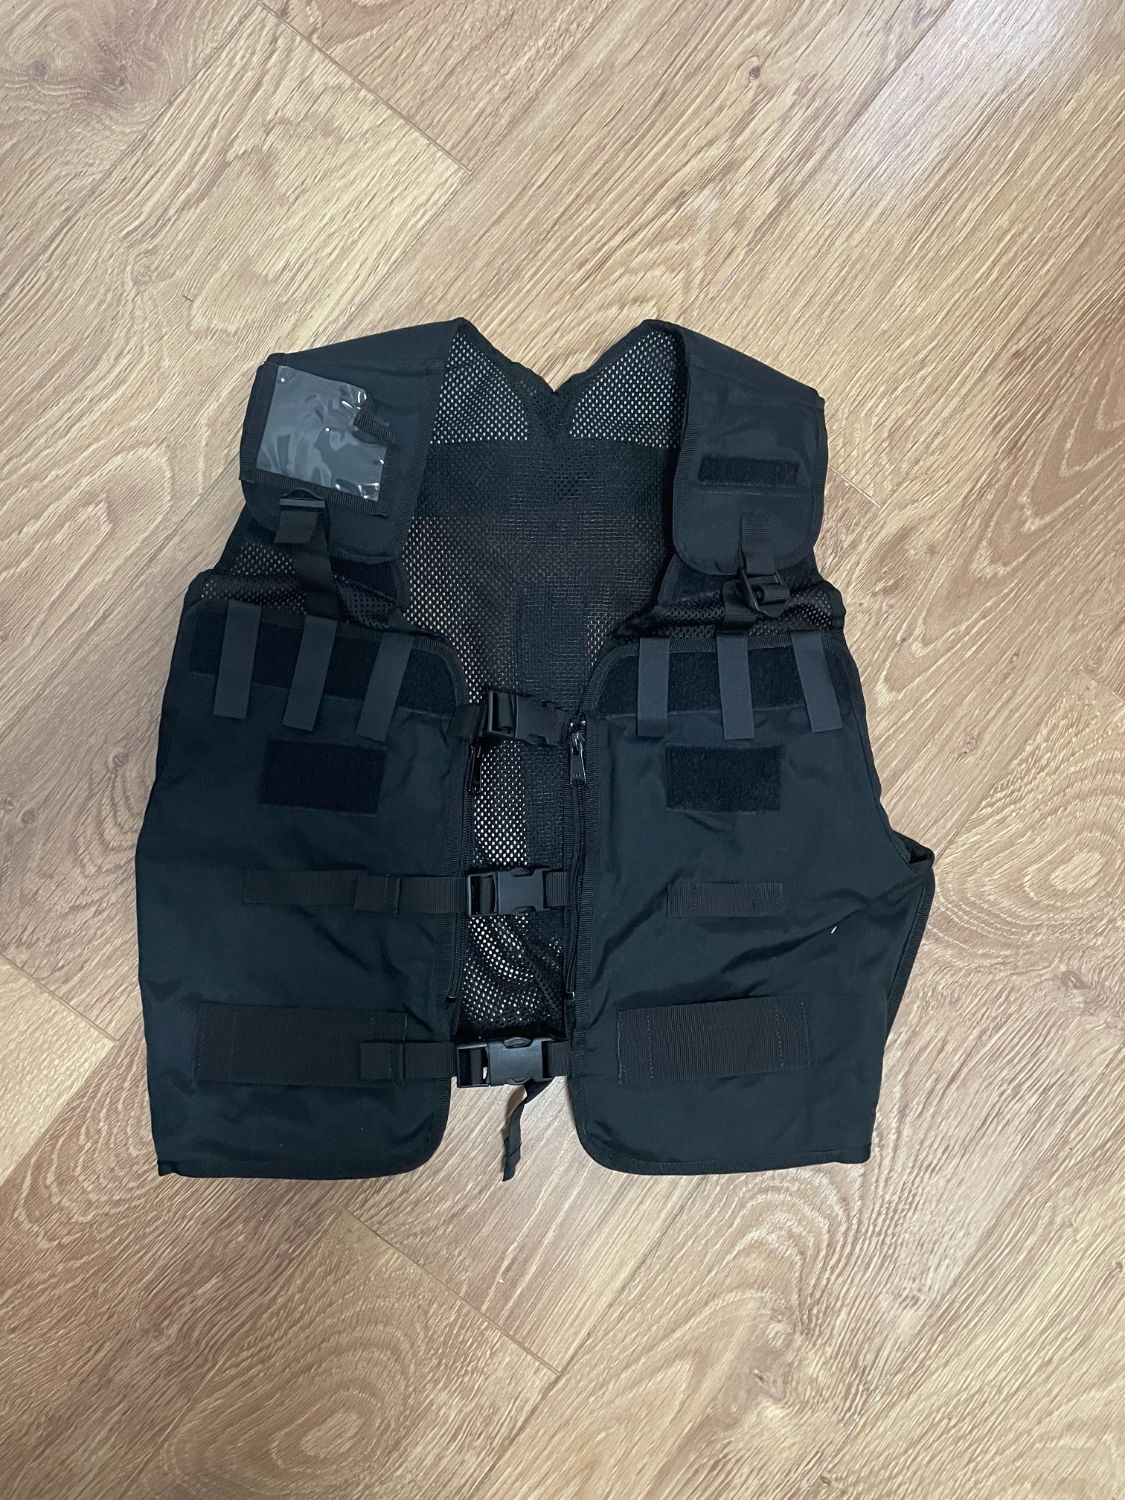 Tactical vest - Gear - Airsoft Forums UK